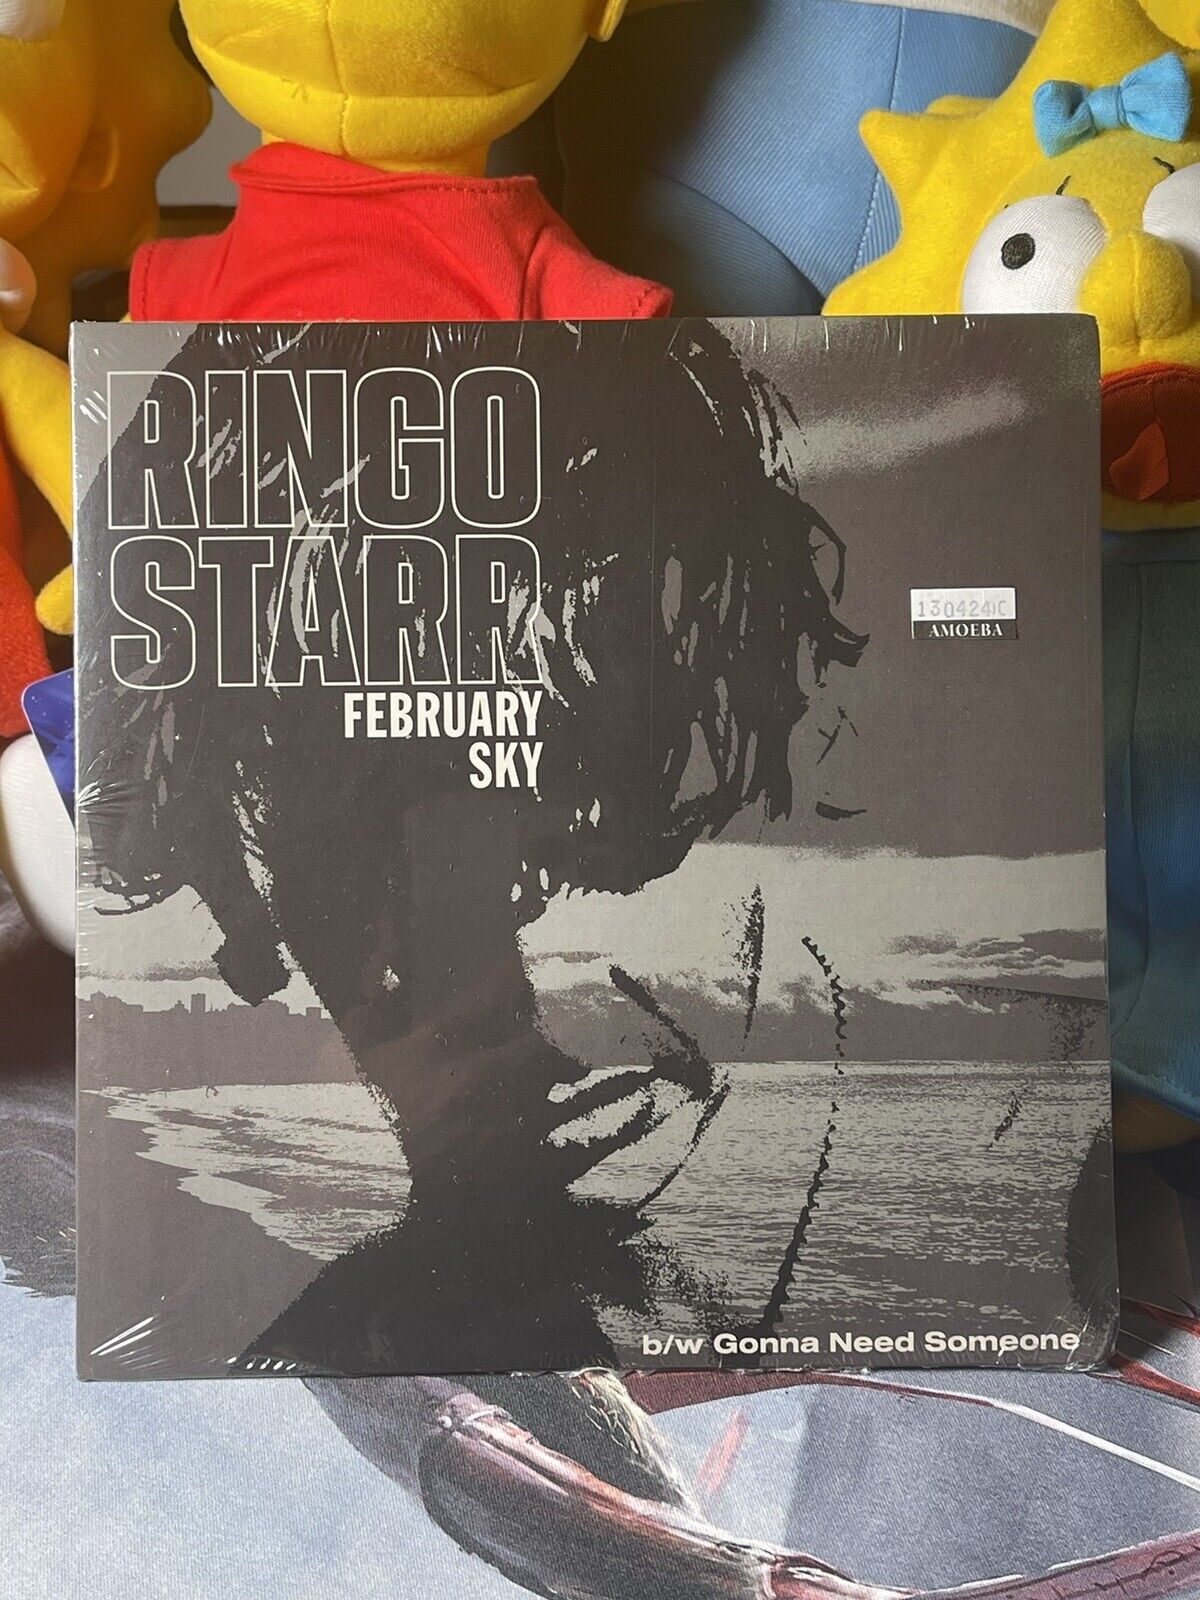 NEW Ringo Starr February Sky 7” red vinyl limited edition SEALED Single Beatles